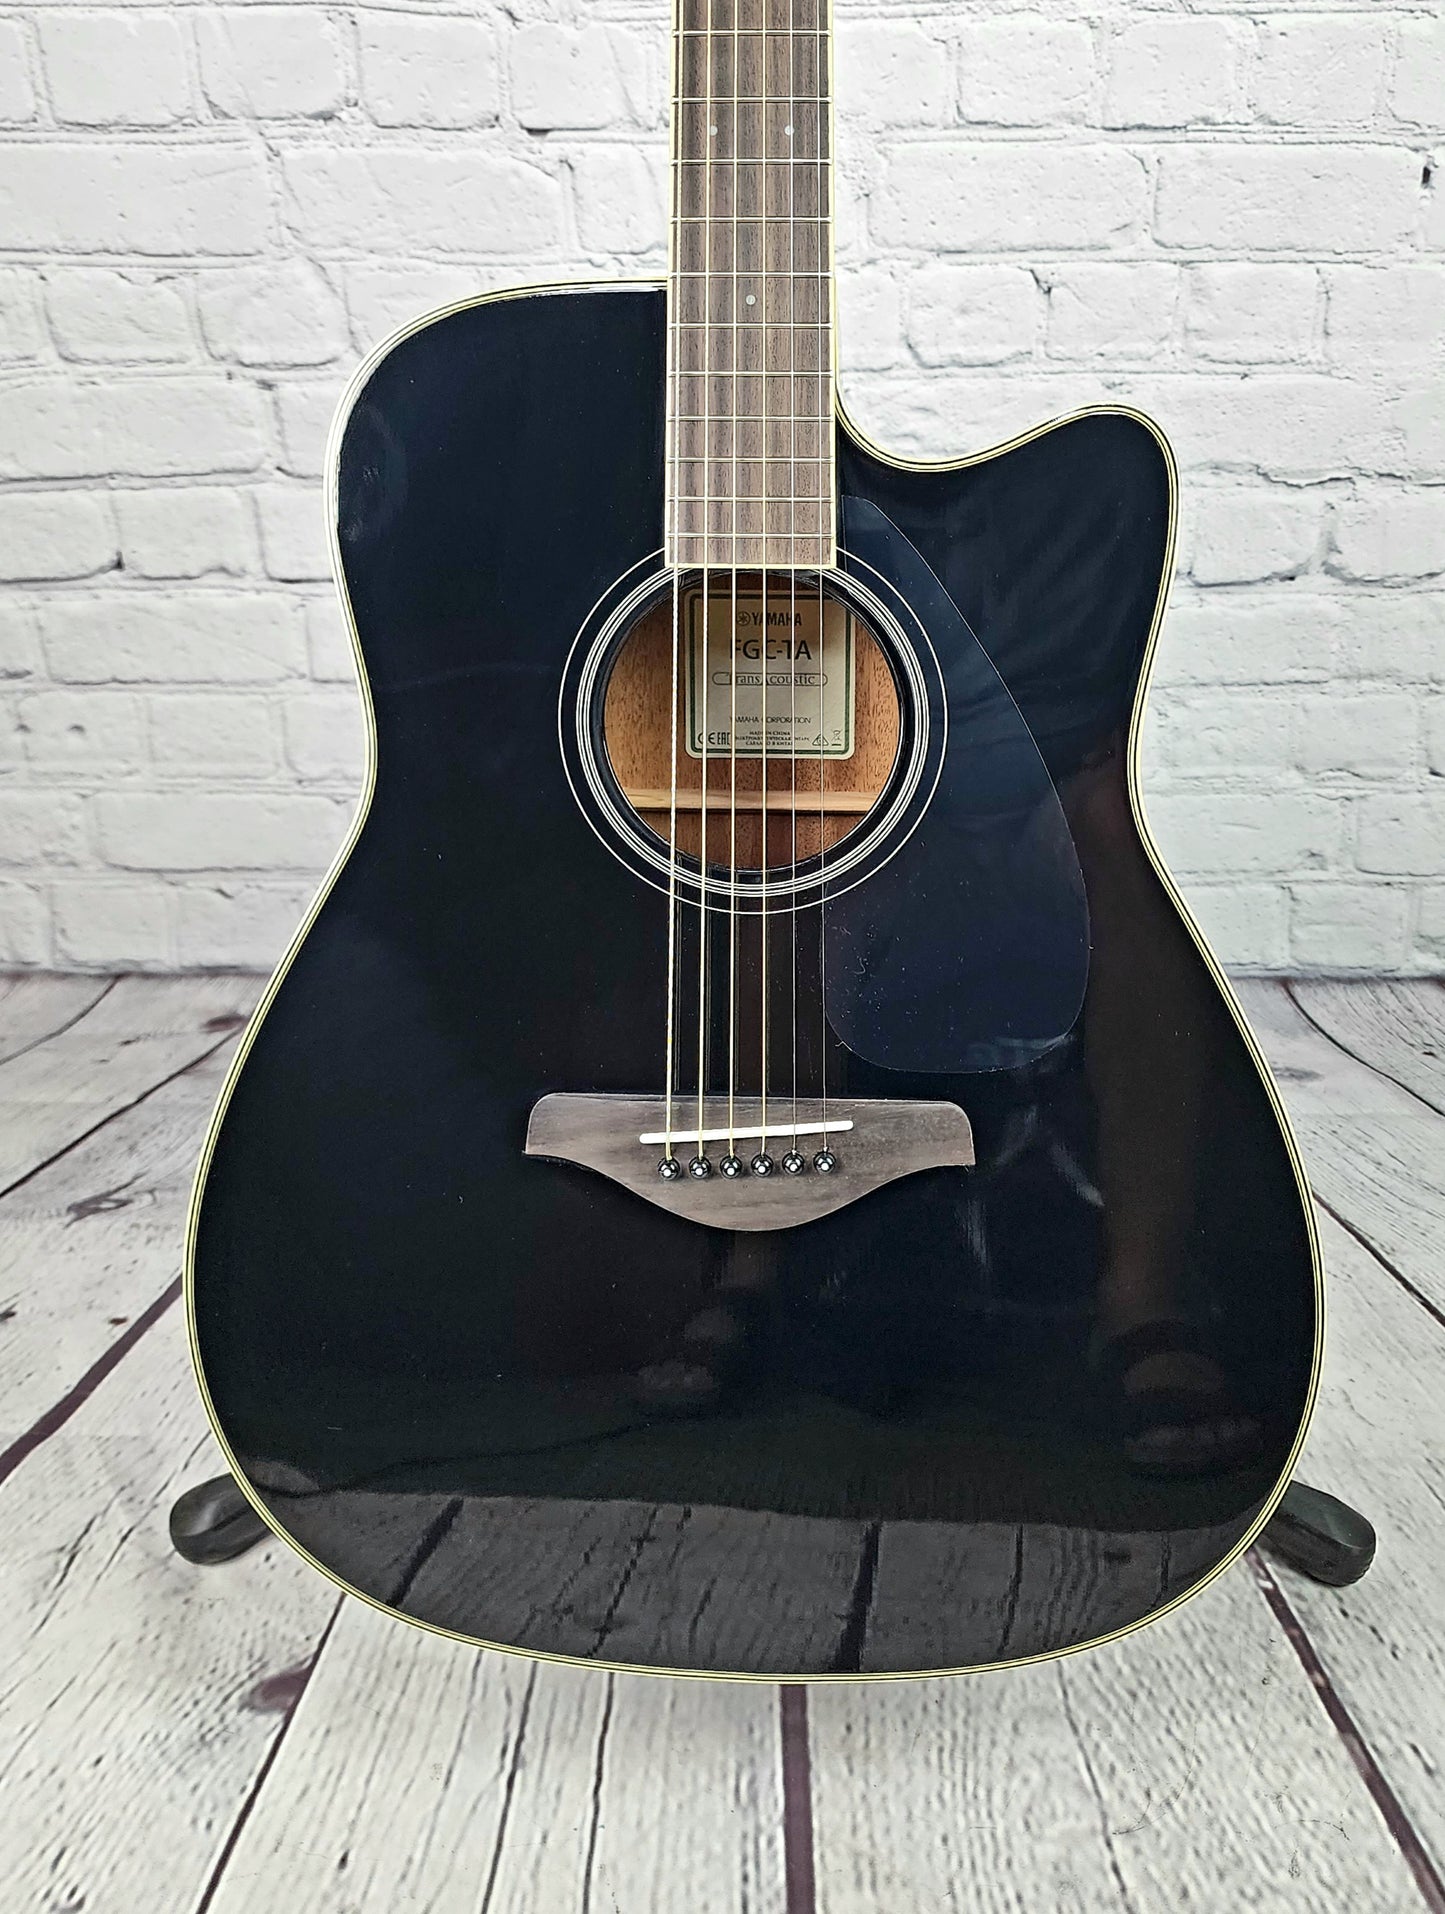 Yamaha FGC-TA BL TransAcoustic Cutaway Acoustic Guitar Black